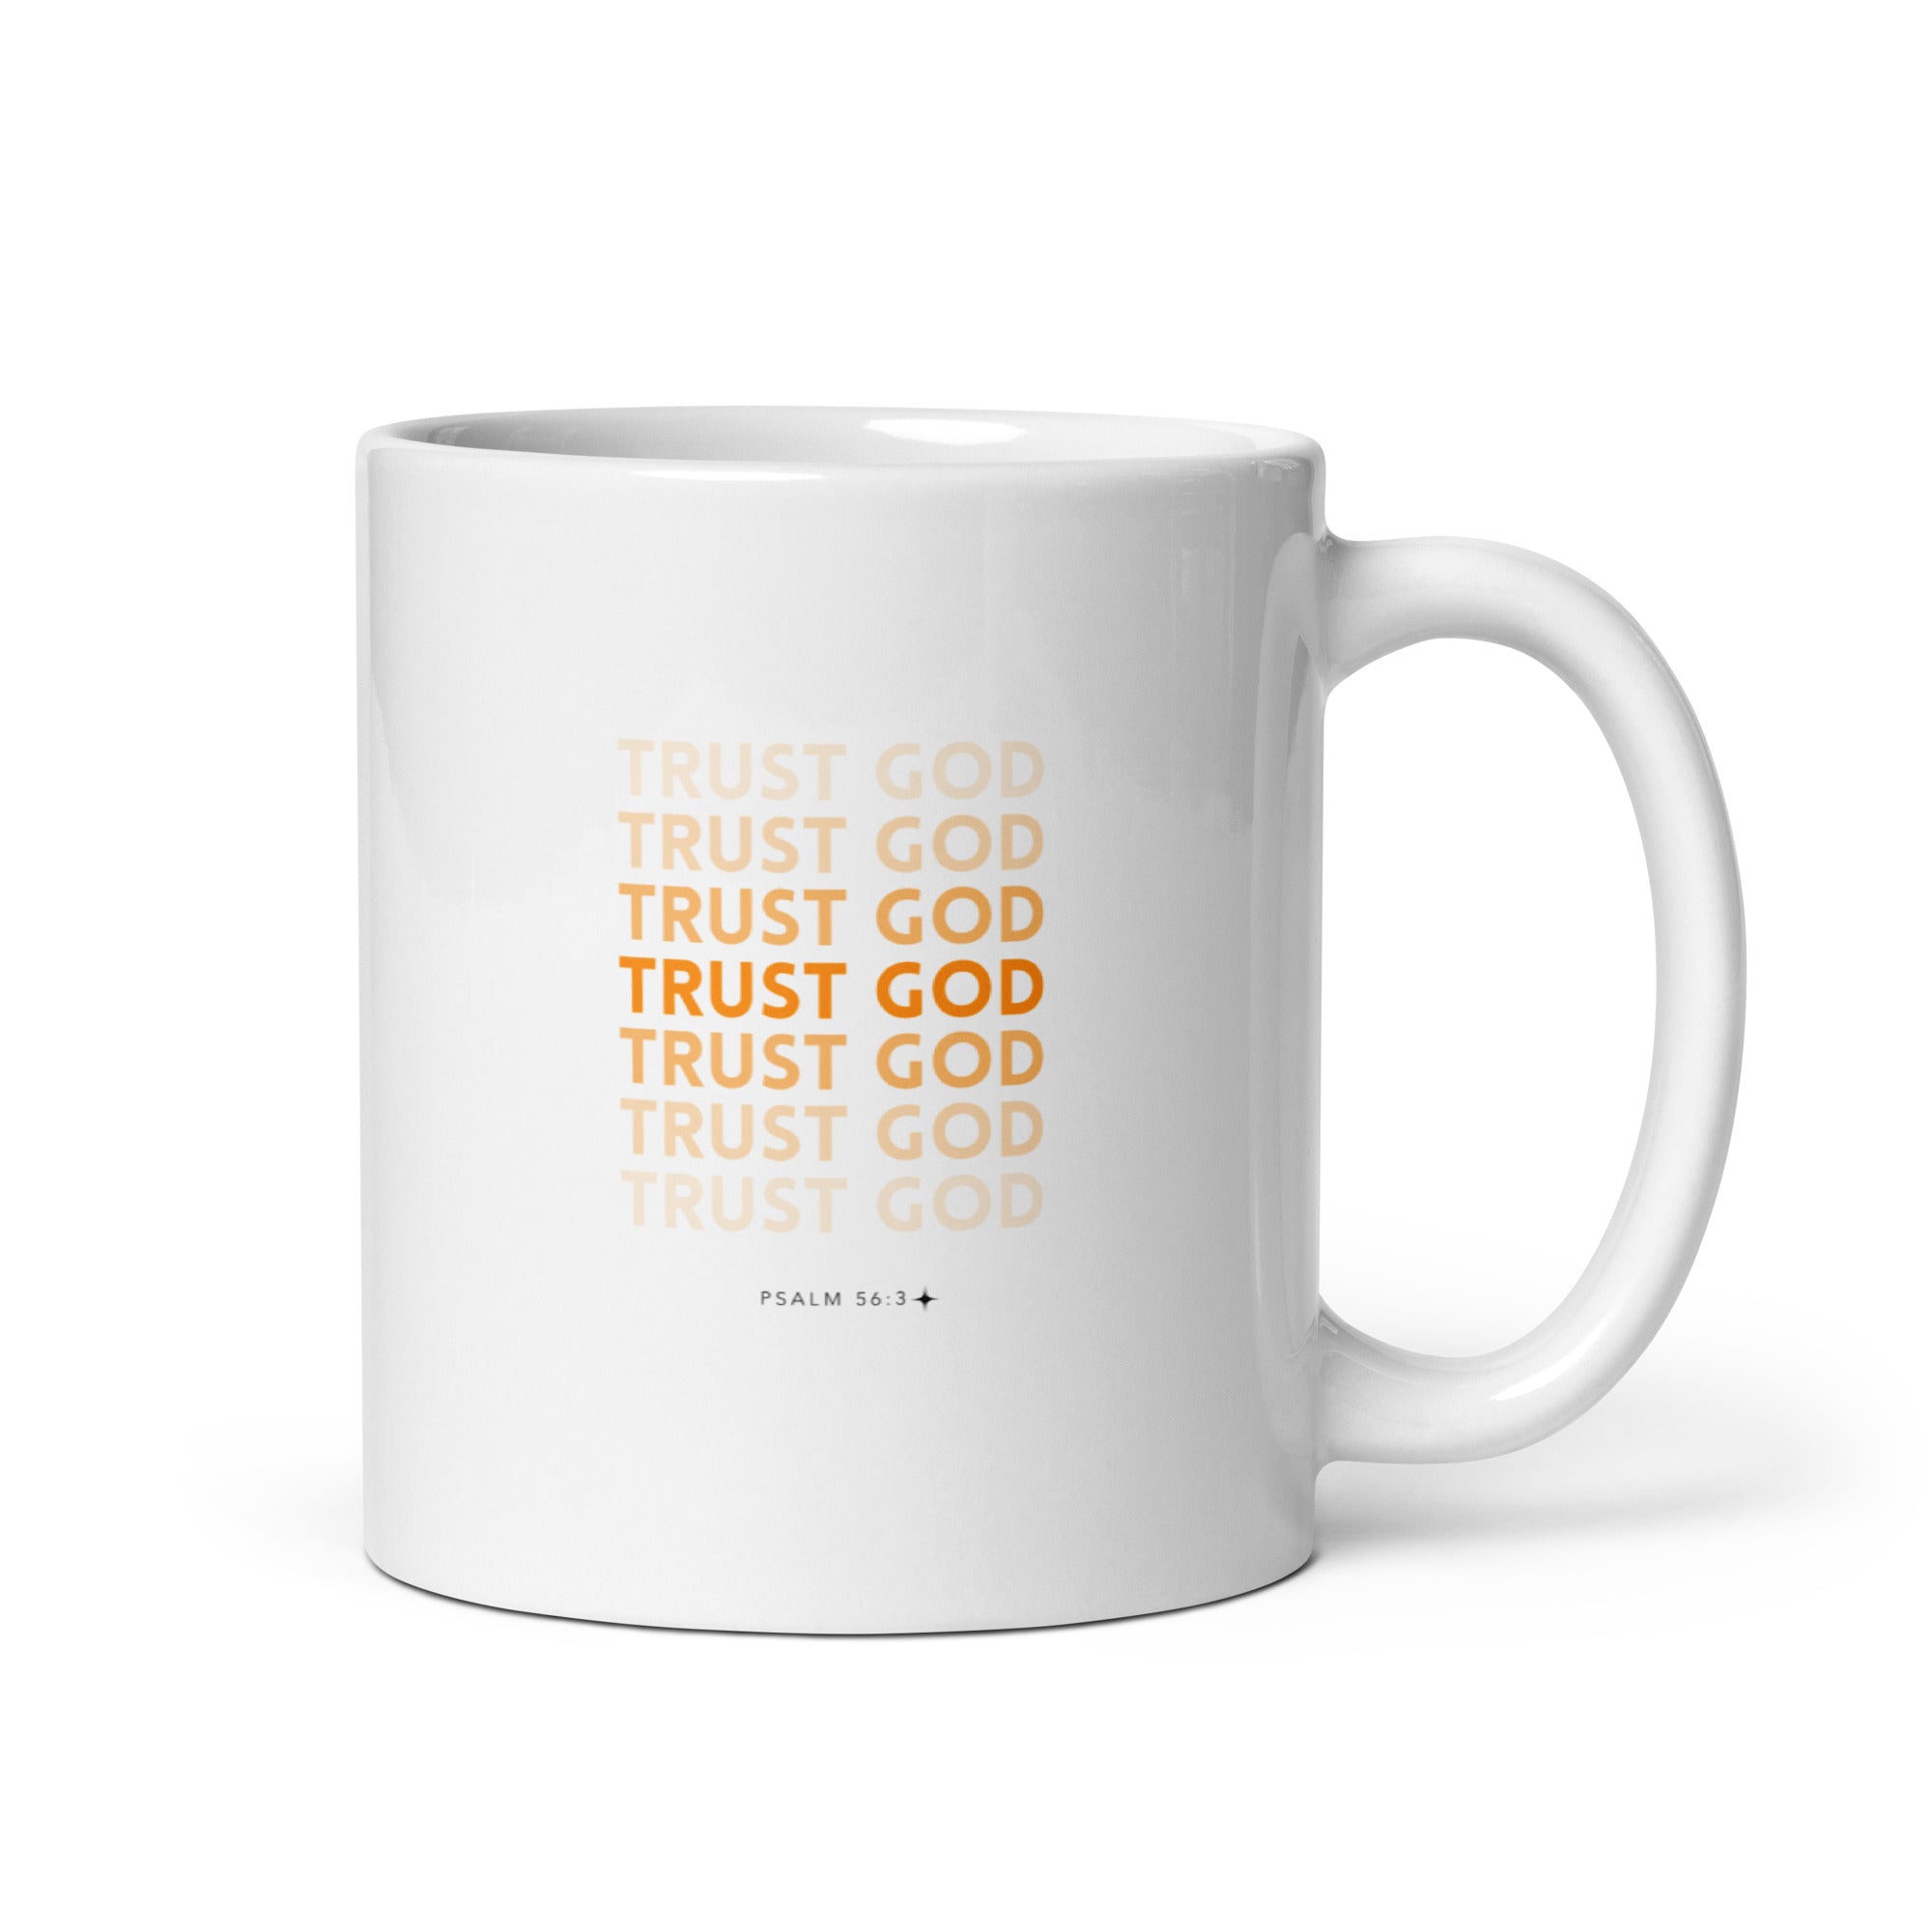 White glossy mug - Psalm 56:3